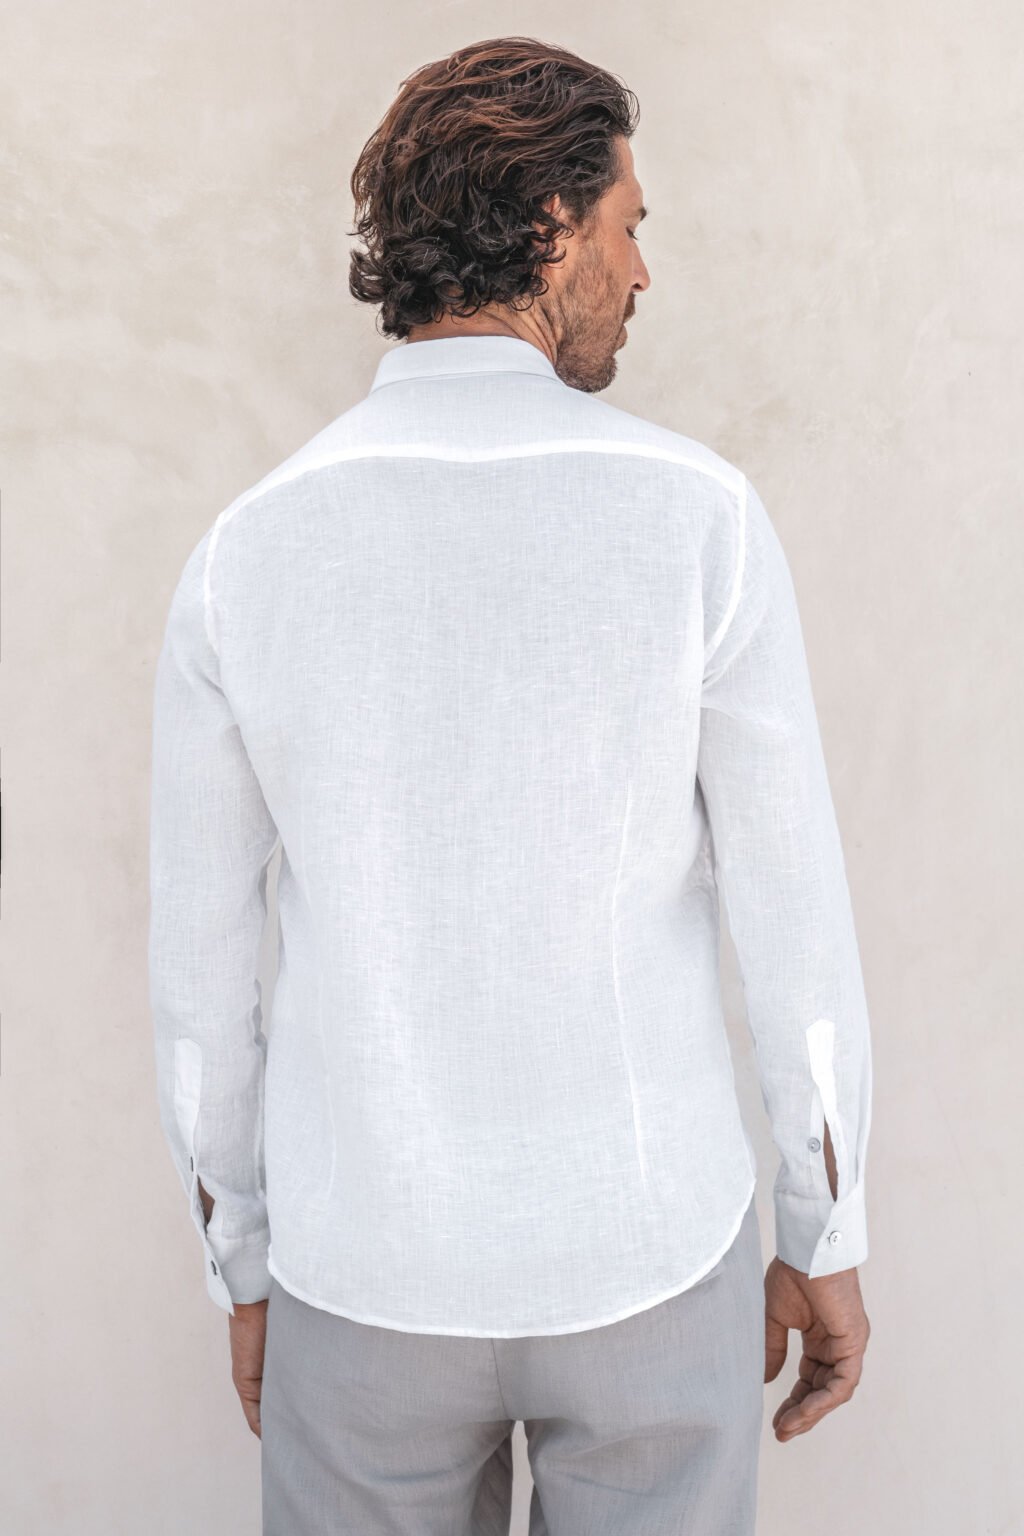 IAW classic bottom down linen shirts white